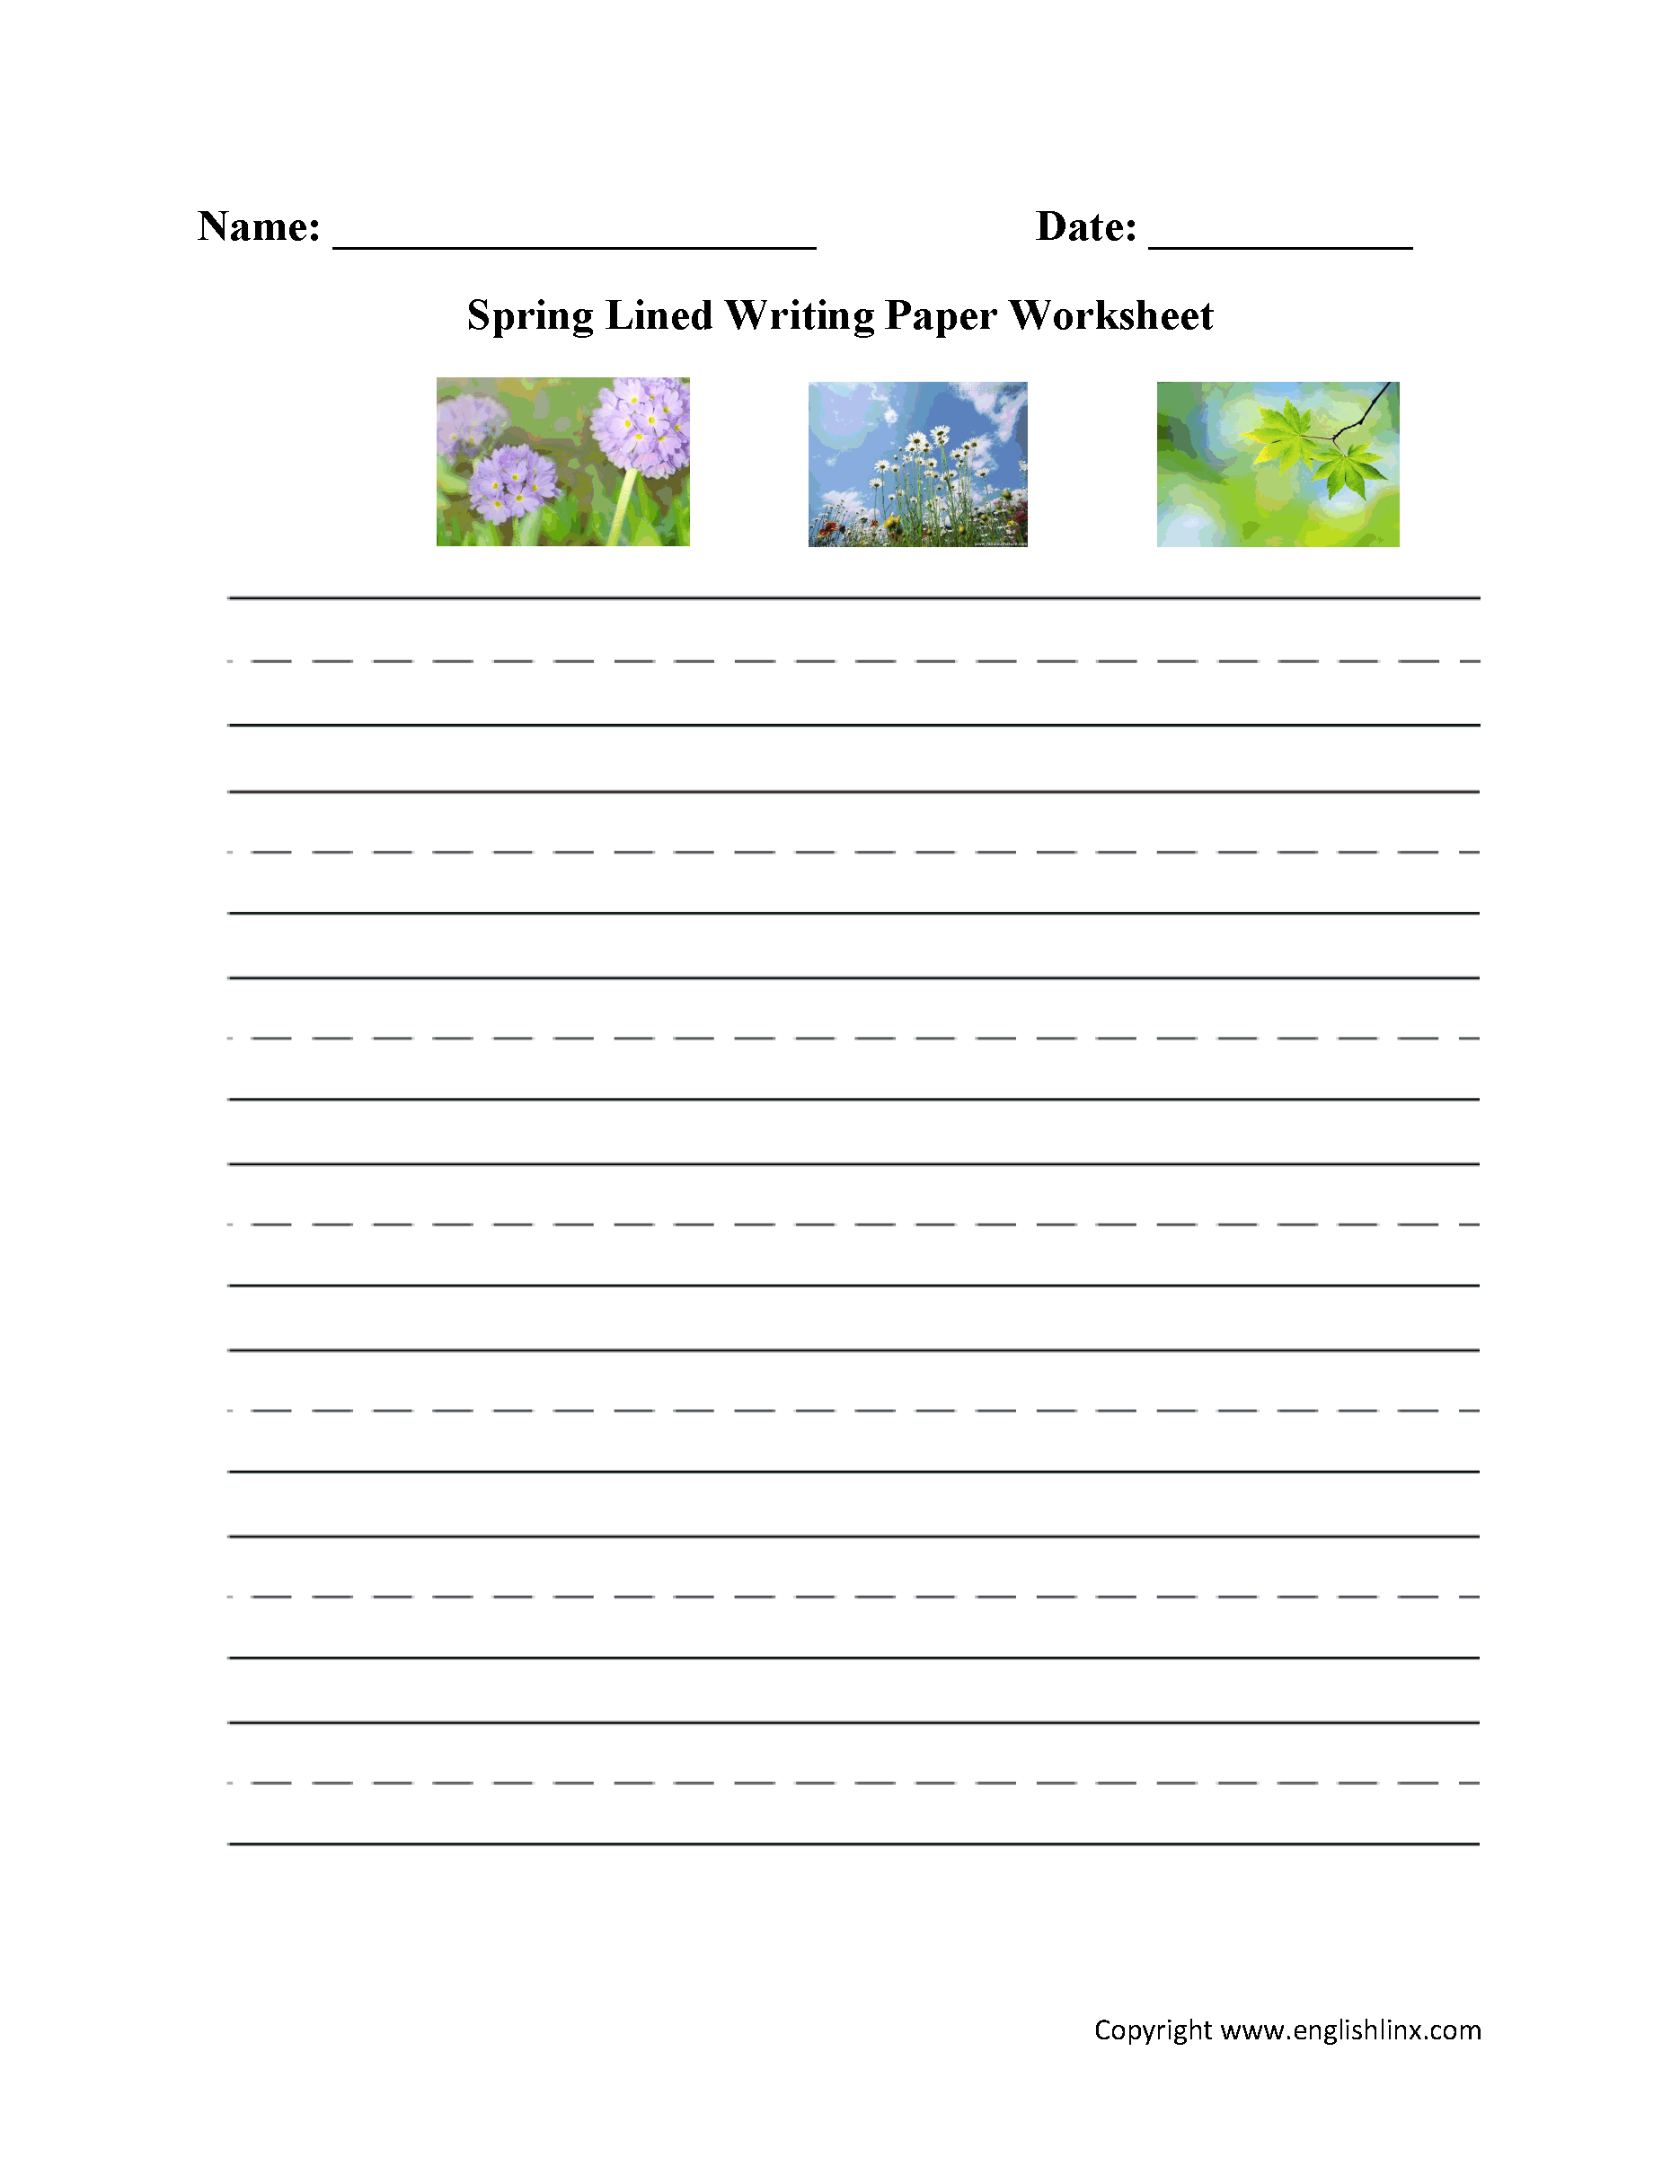 Spring Lined Writing Paper Worksheet